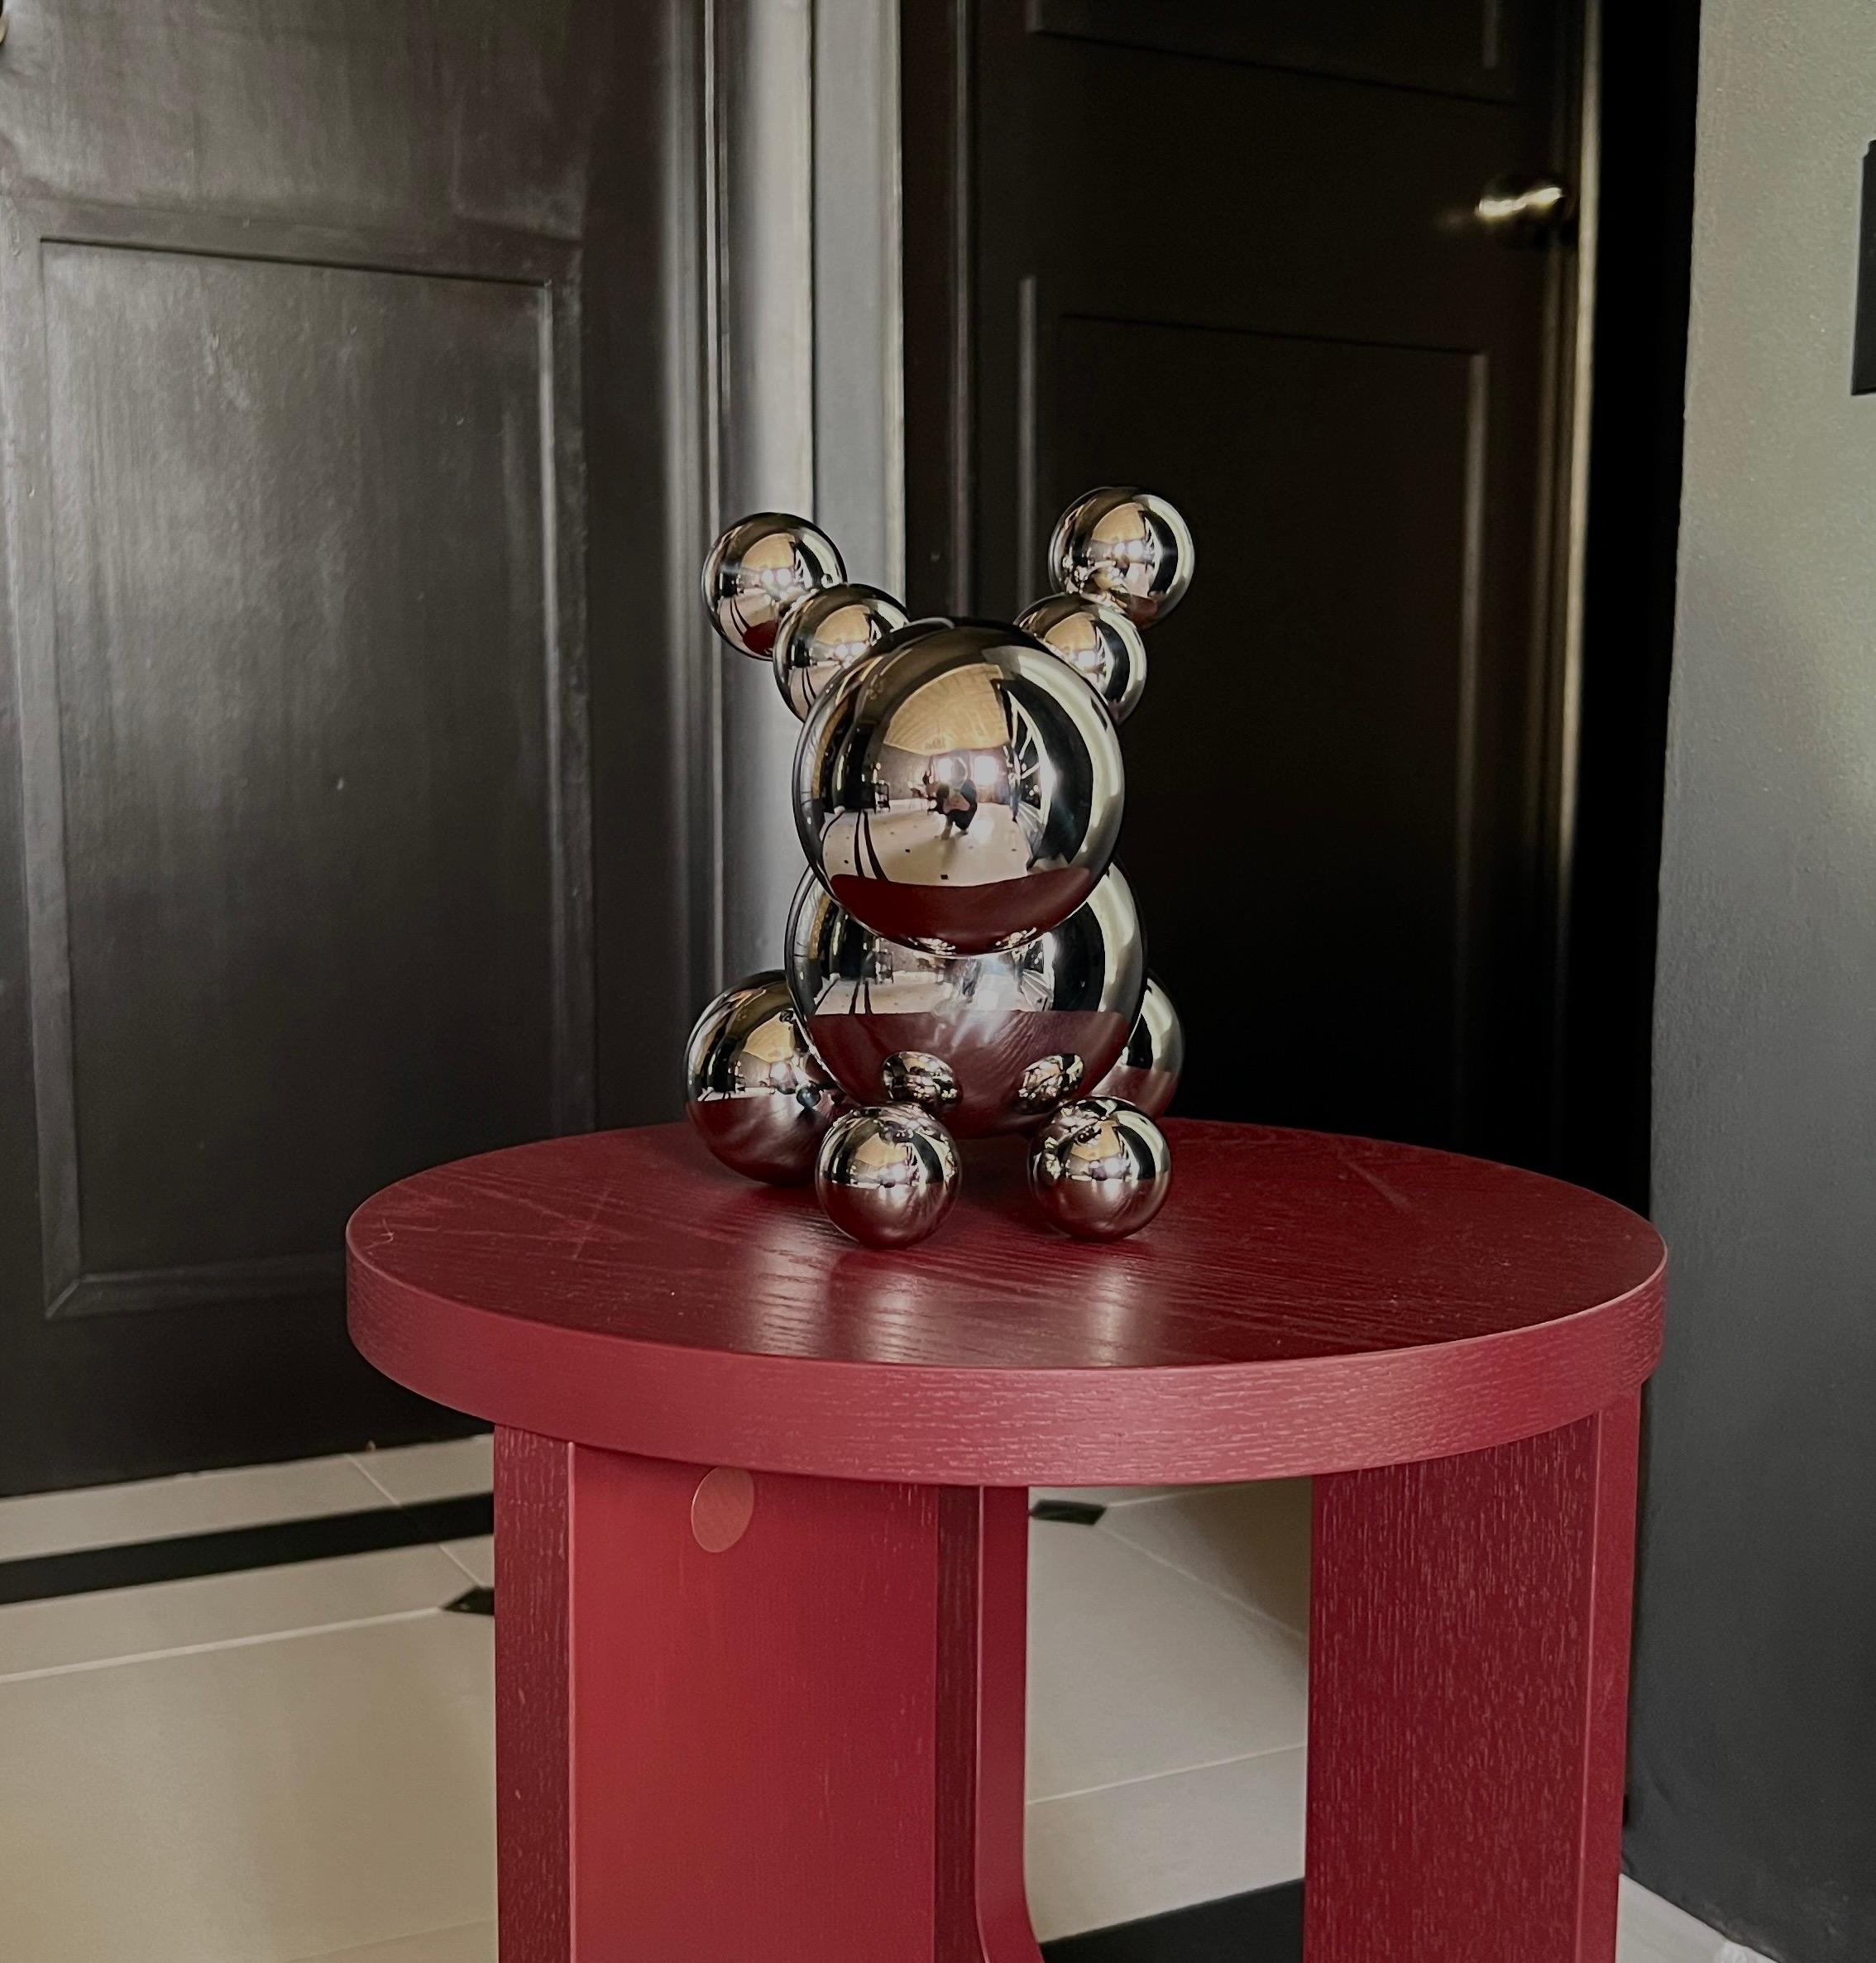 Stainless Steel Rabbit Bunny Robot 'Ross' Minimalistic Art 10